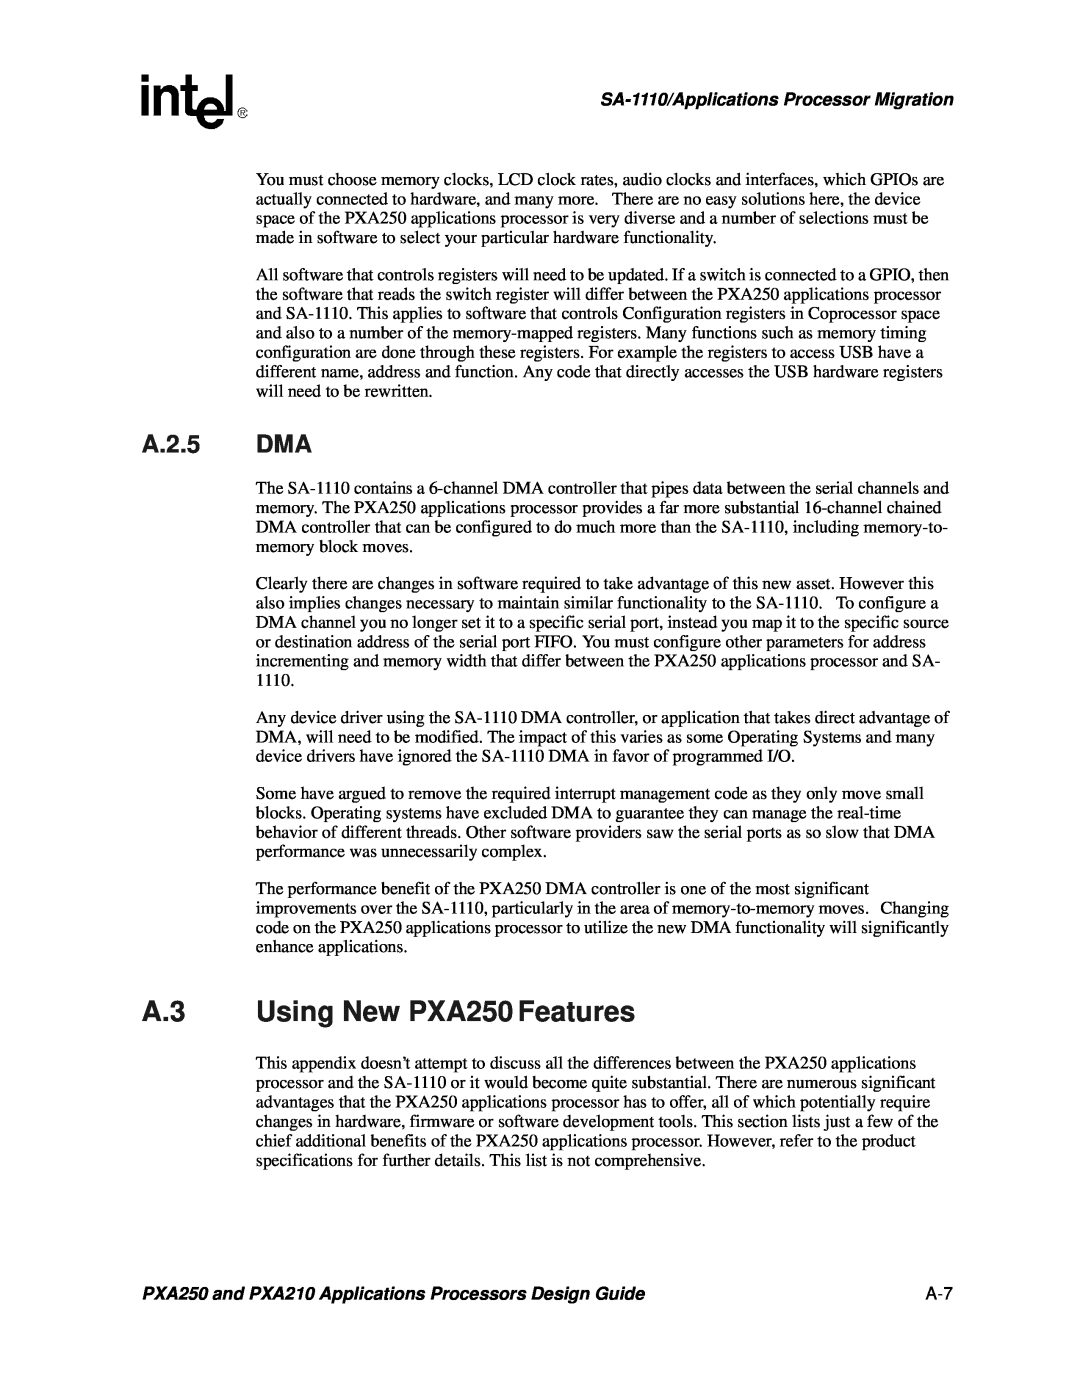 Intel PXA250 and PXA210 manual A.3 Using New PXA250 Features, A.2.5 DMA, SA-1110/Applications Processor Migration 